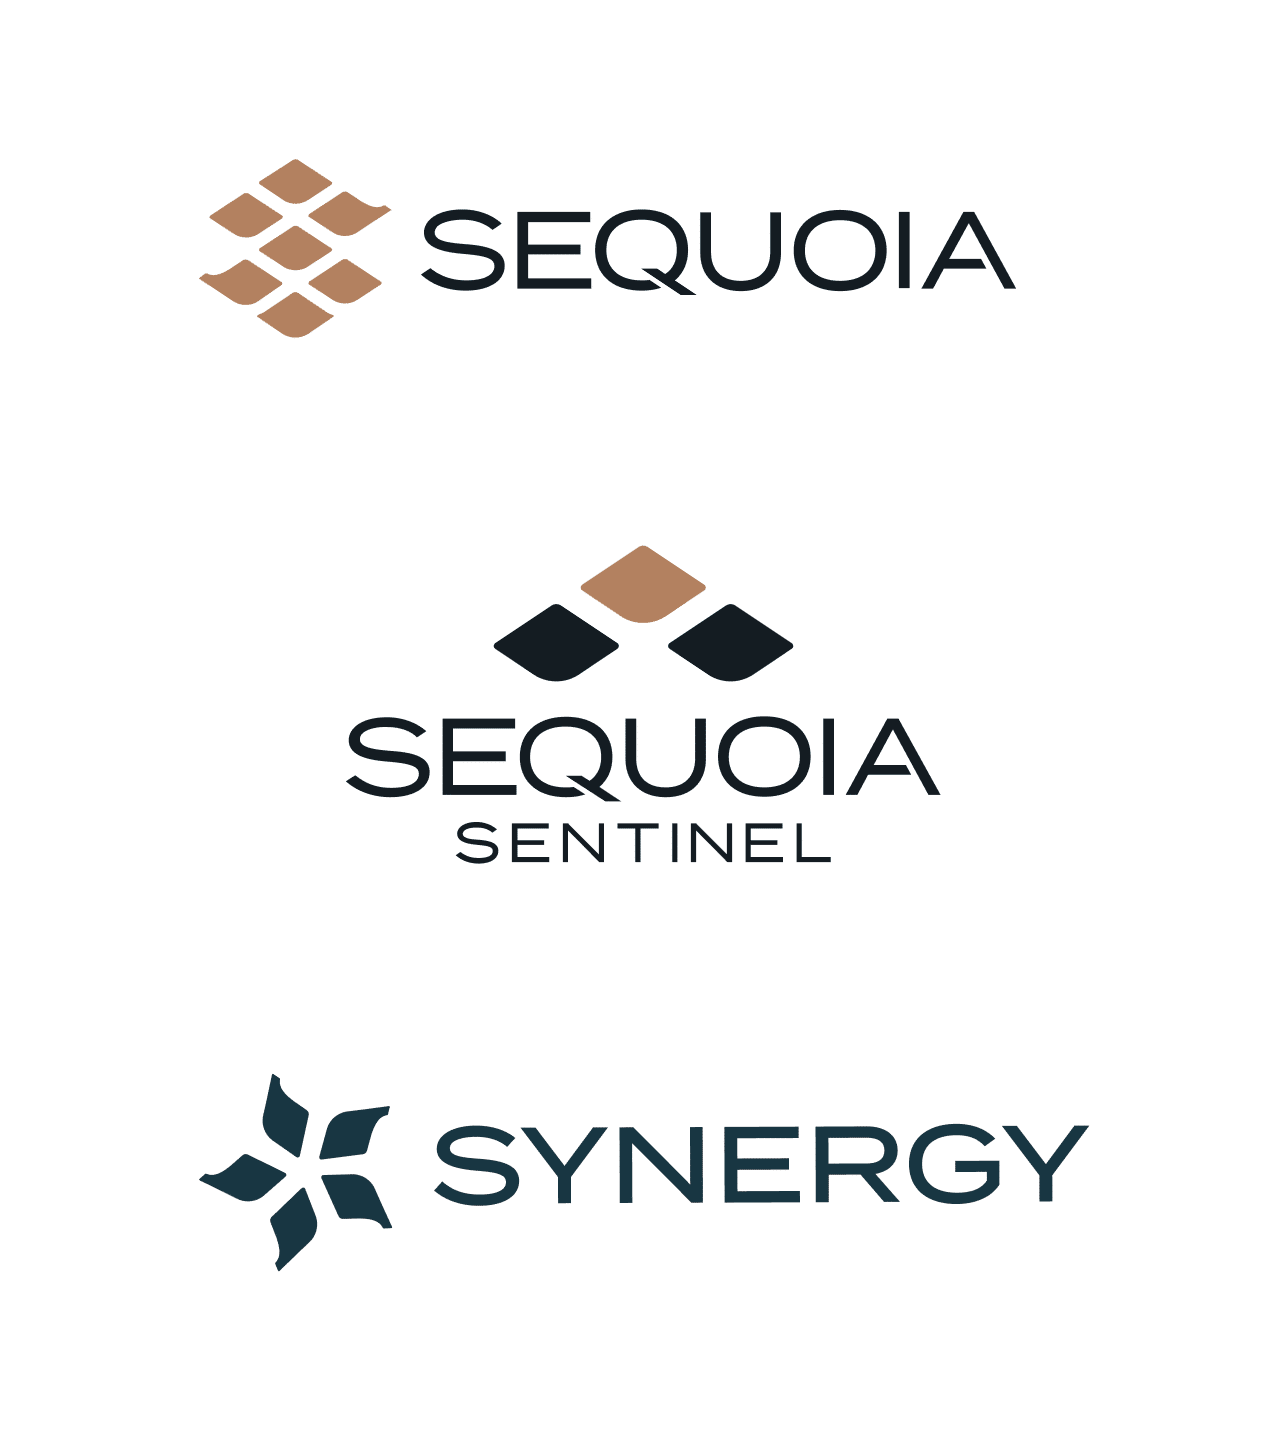 Sequoia logo and sub-brands